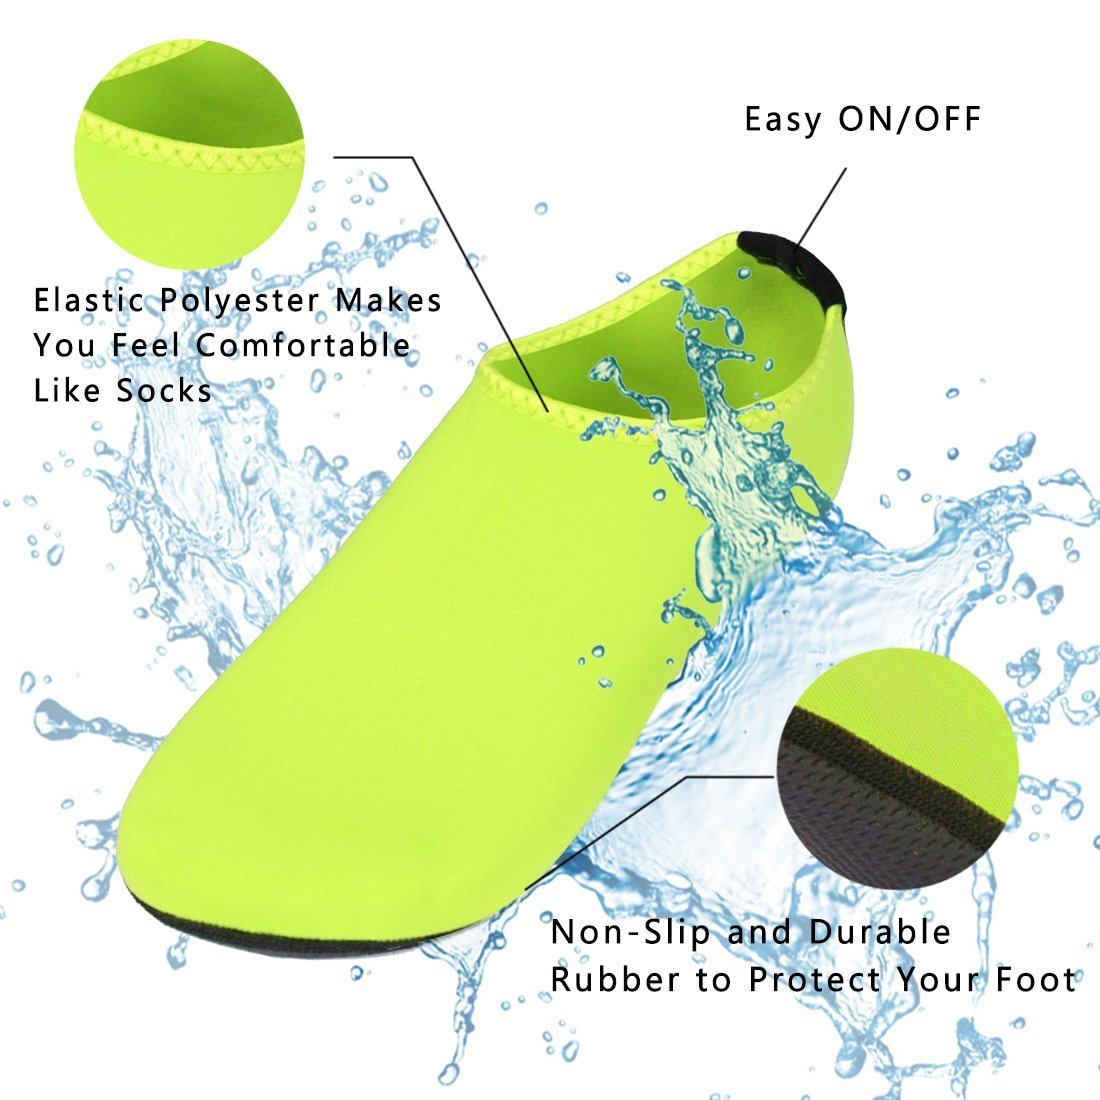 Barefoot Skin Water Shoes Aqua Socks For Beach Surf Yoga Exercise Aerobics